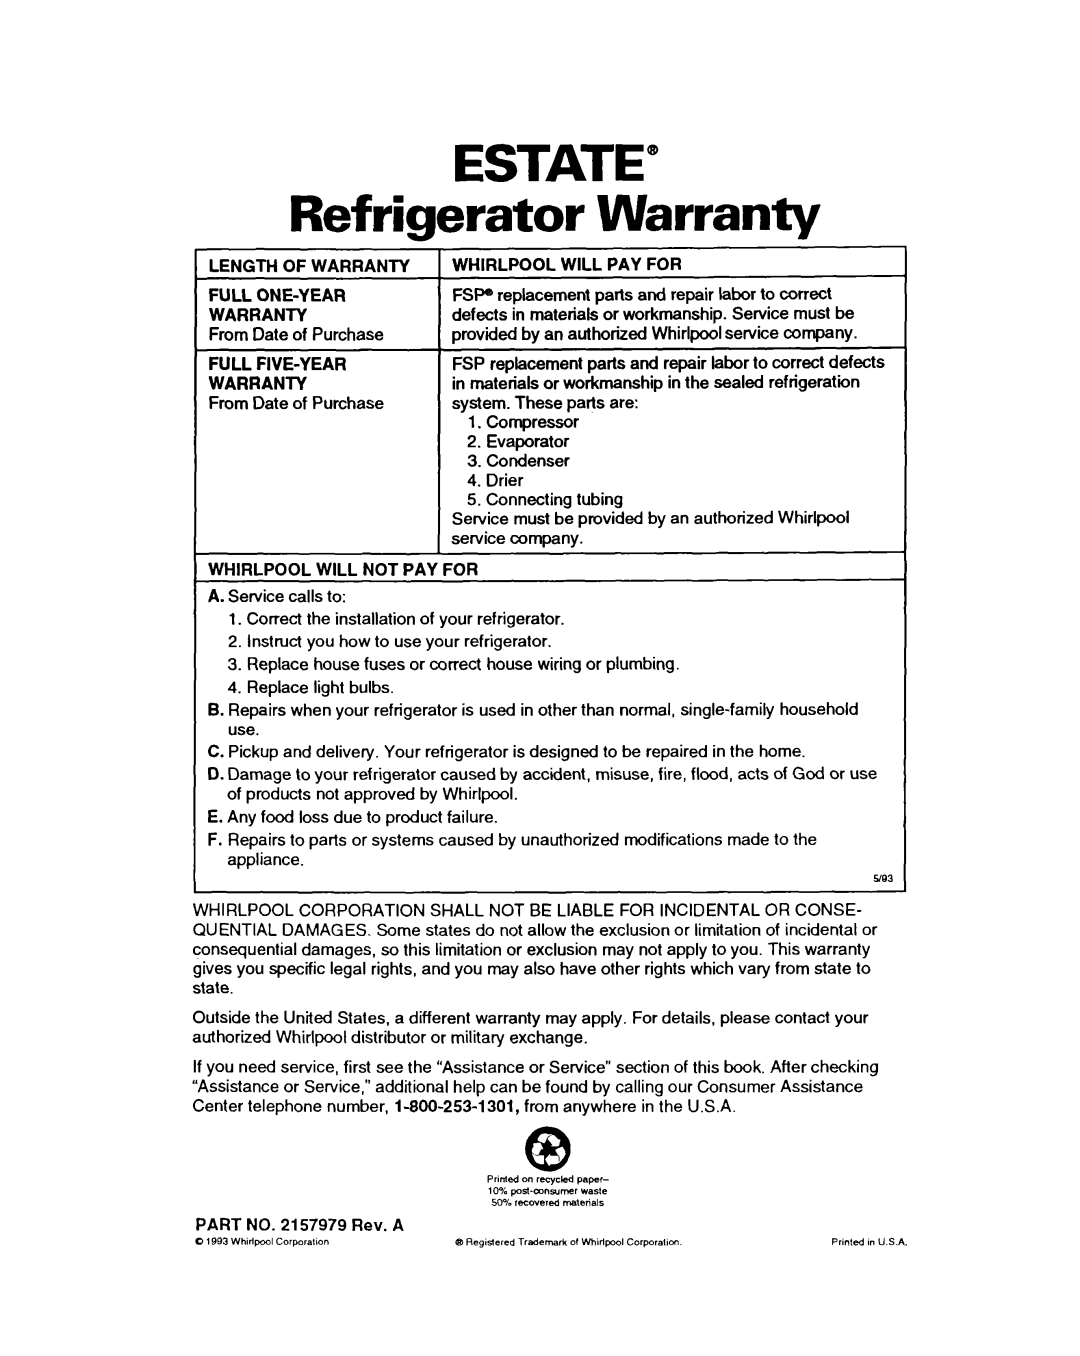 Estate TT18DK, TT20DK ESTATE” Refrigerator Warranty, Length Of Warranty Full One-Year Warranty, Full Five-Year Warranty 